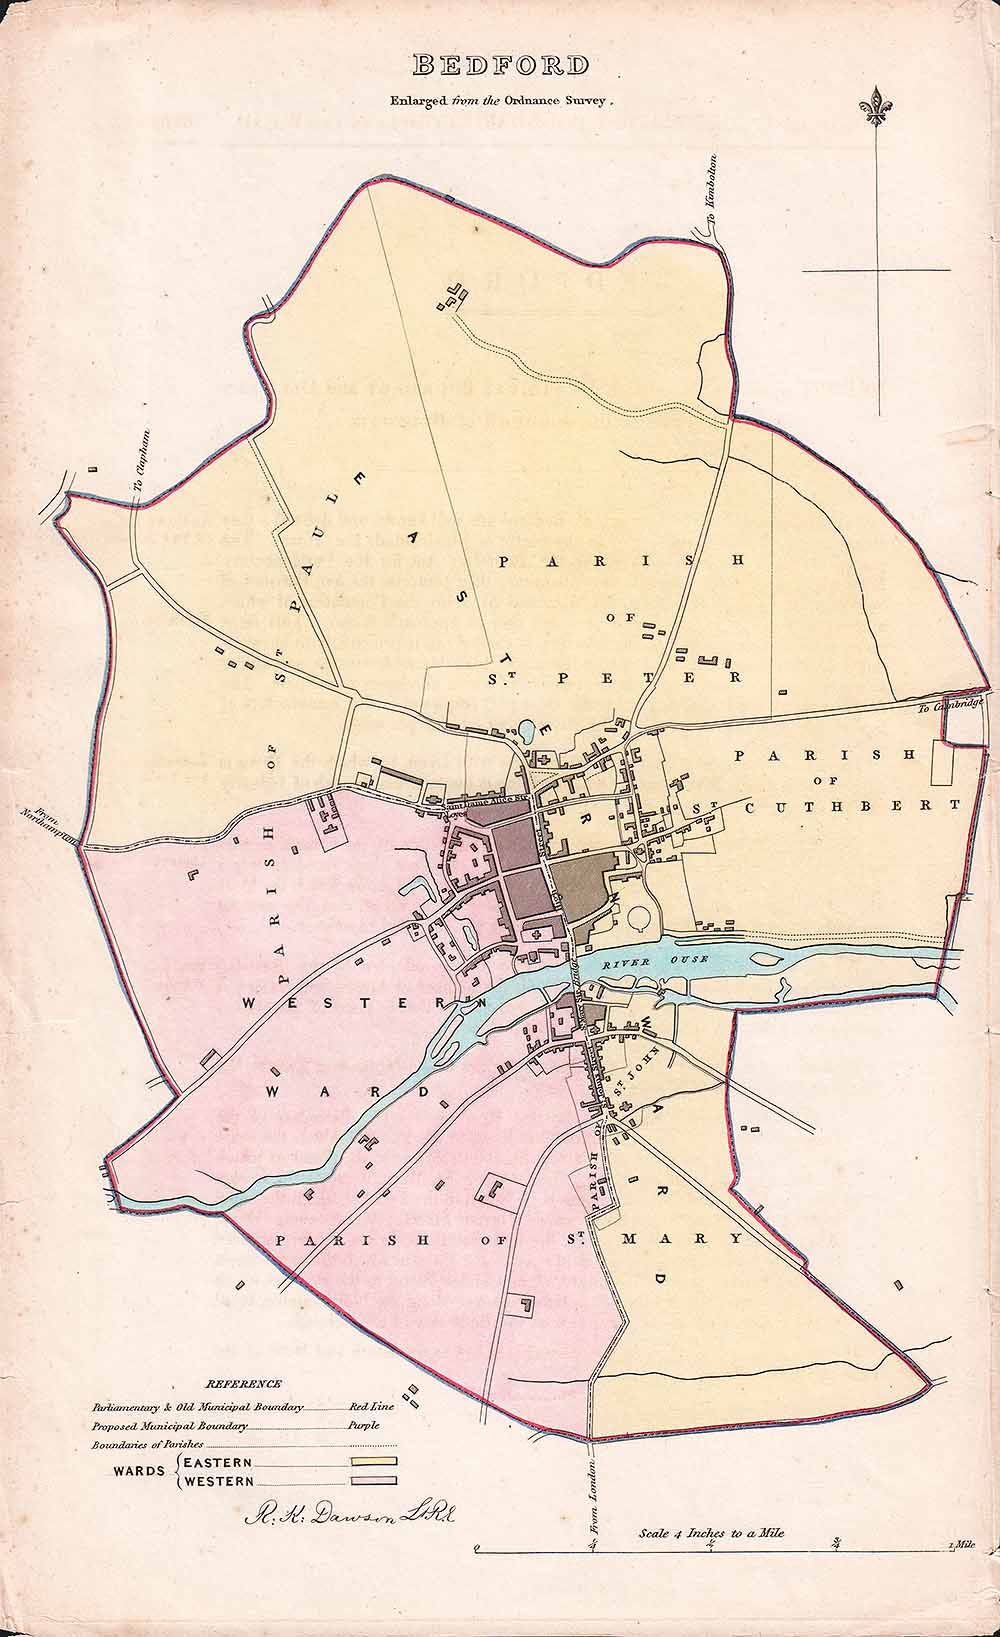 Bedford Town Plan - RK Dawson 